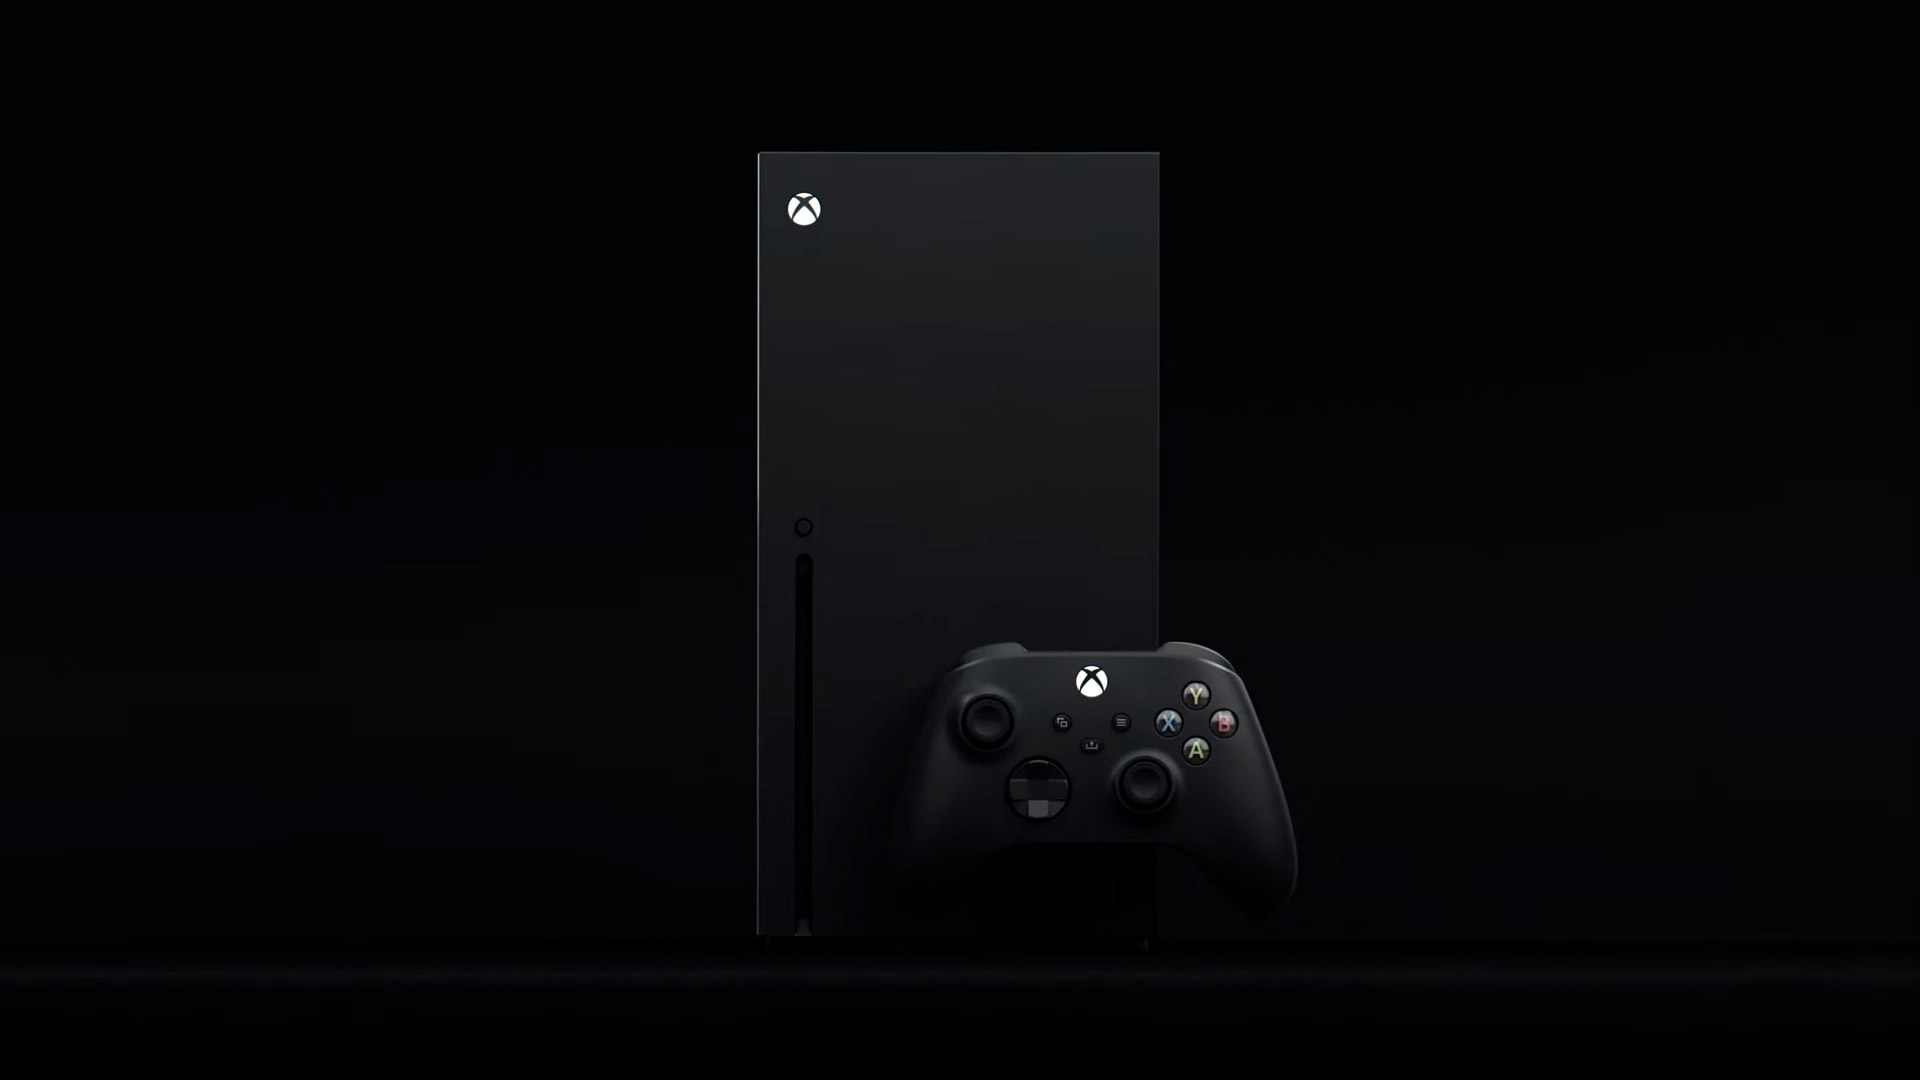 Xbox Series S, Xbox Series X ಸುದ್ದಿಗಳು Tgs 2020 ಕ್ಕಿಂತ ಮೊದಲು ಬರಲಿವೆ - ವದಂತಿ